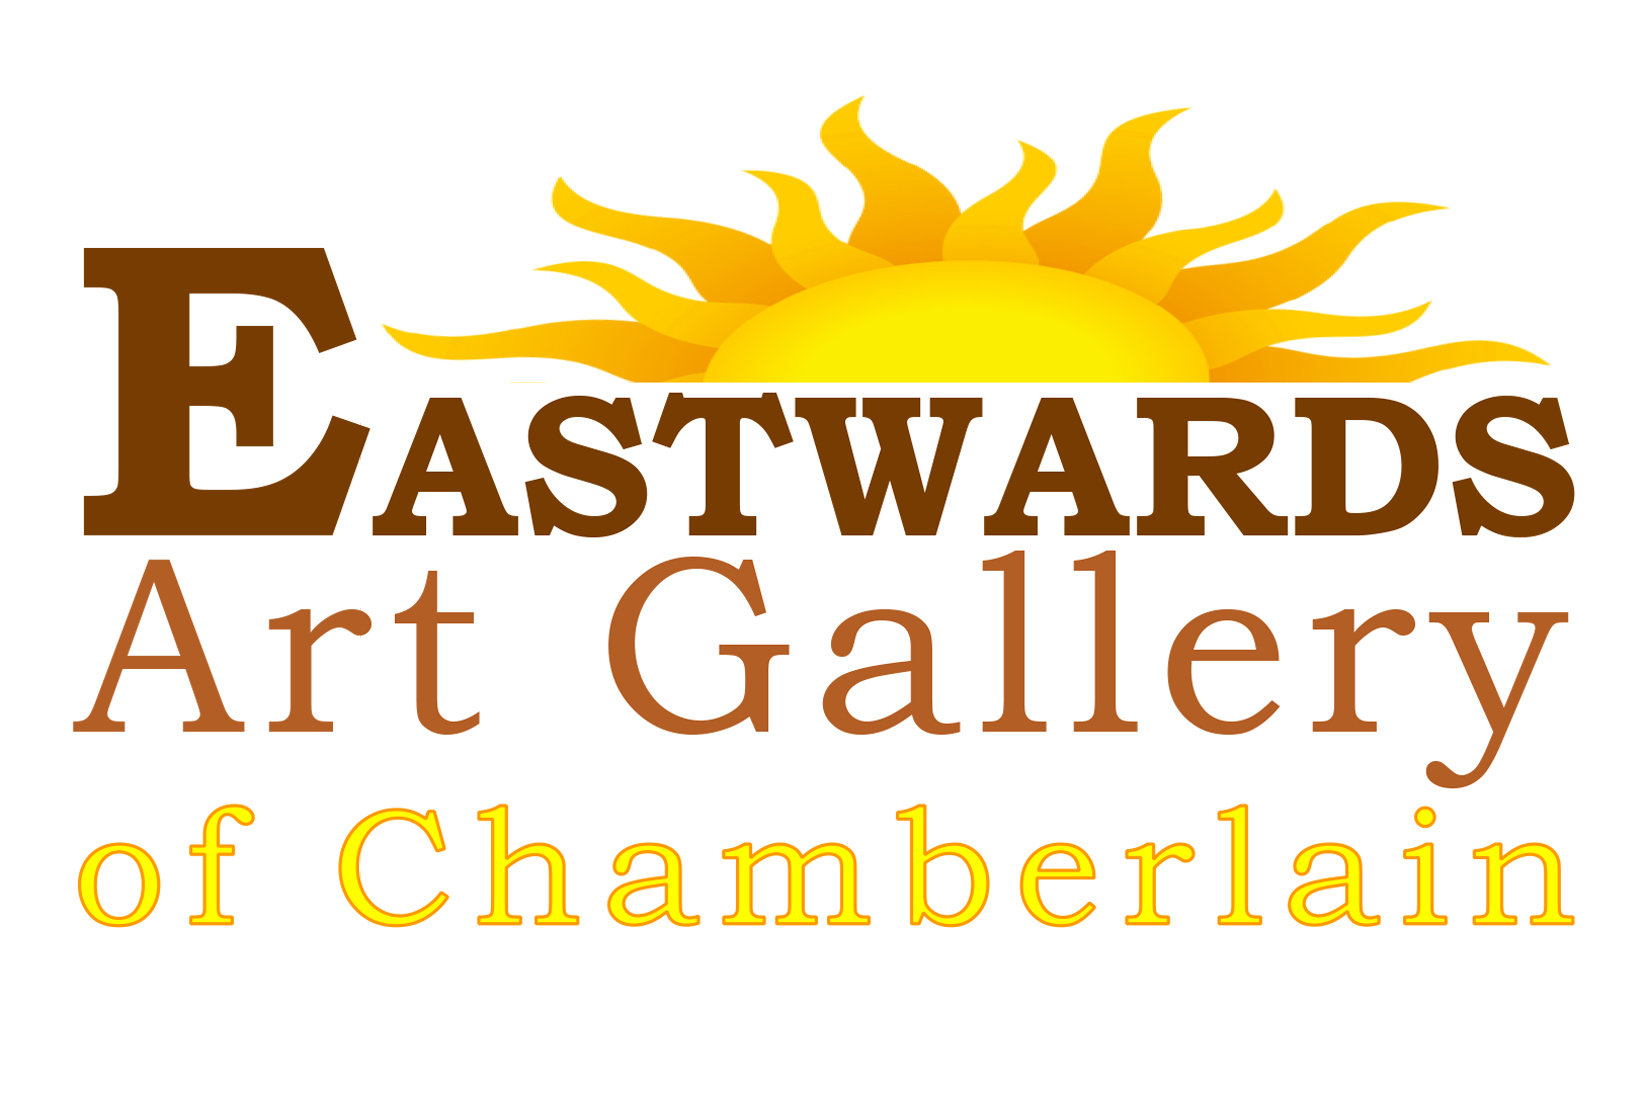 Eastwards Art Gallery of Chamberlain logo